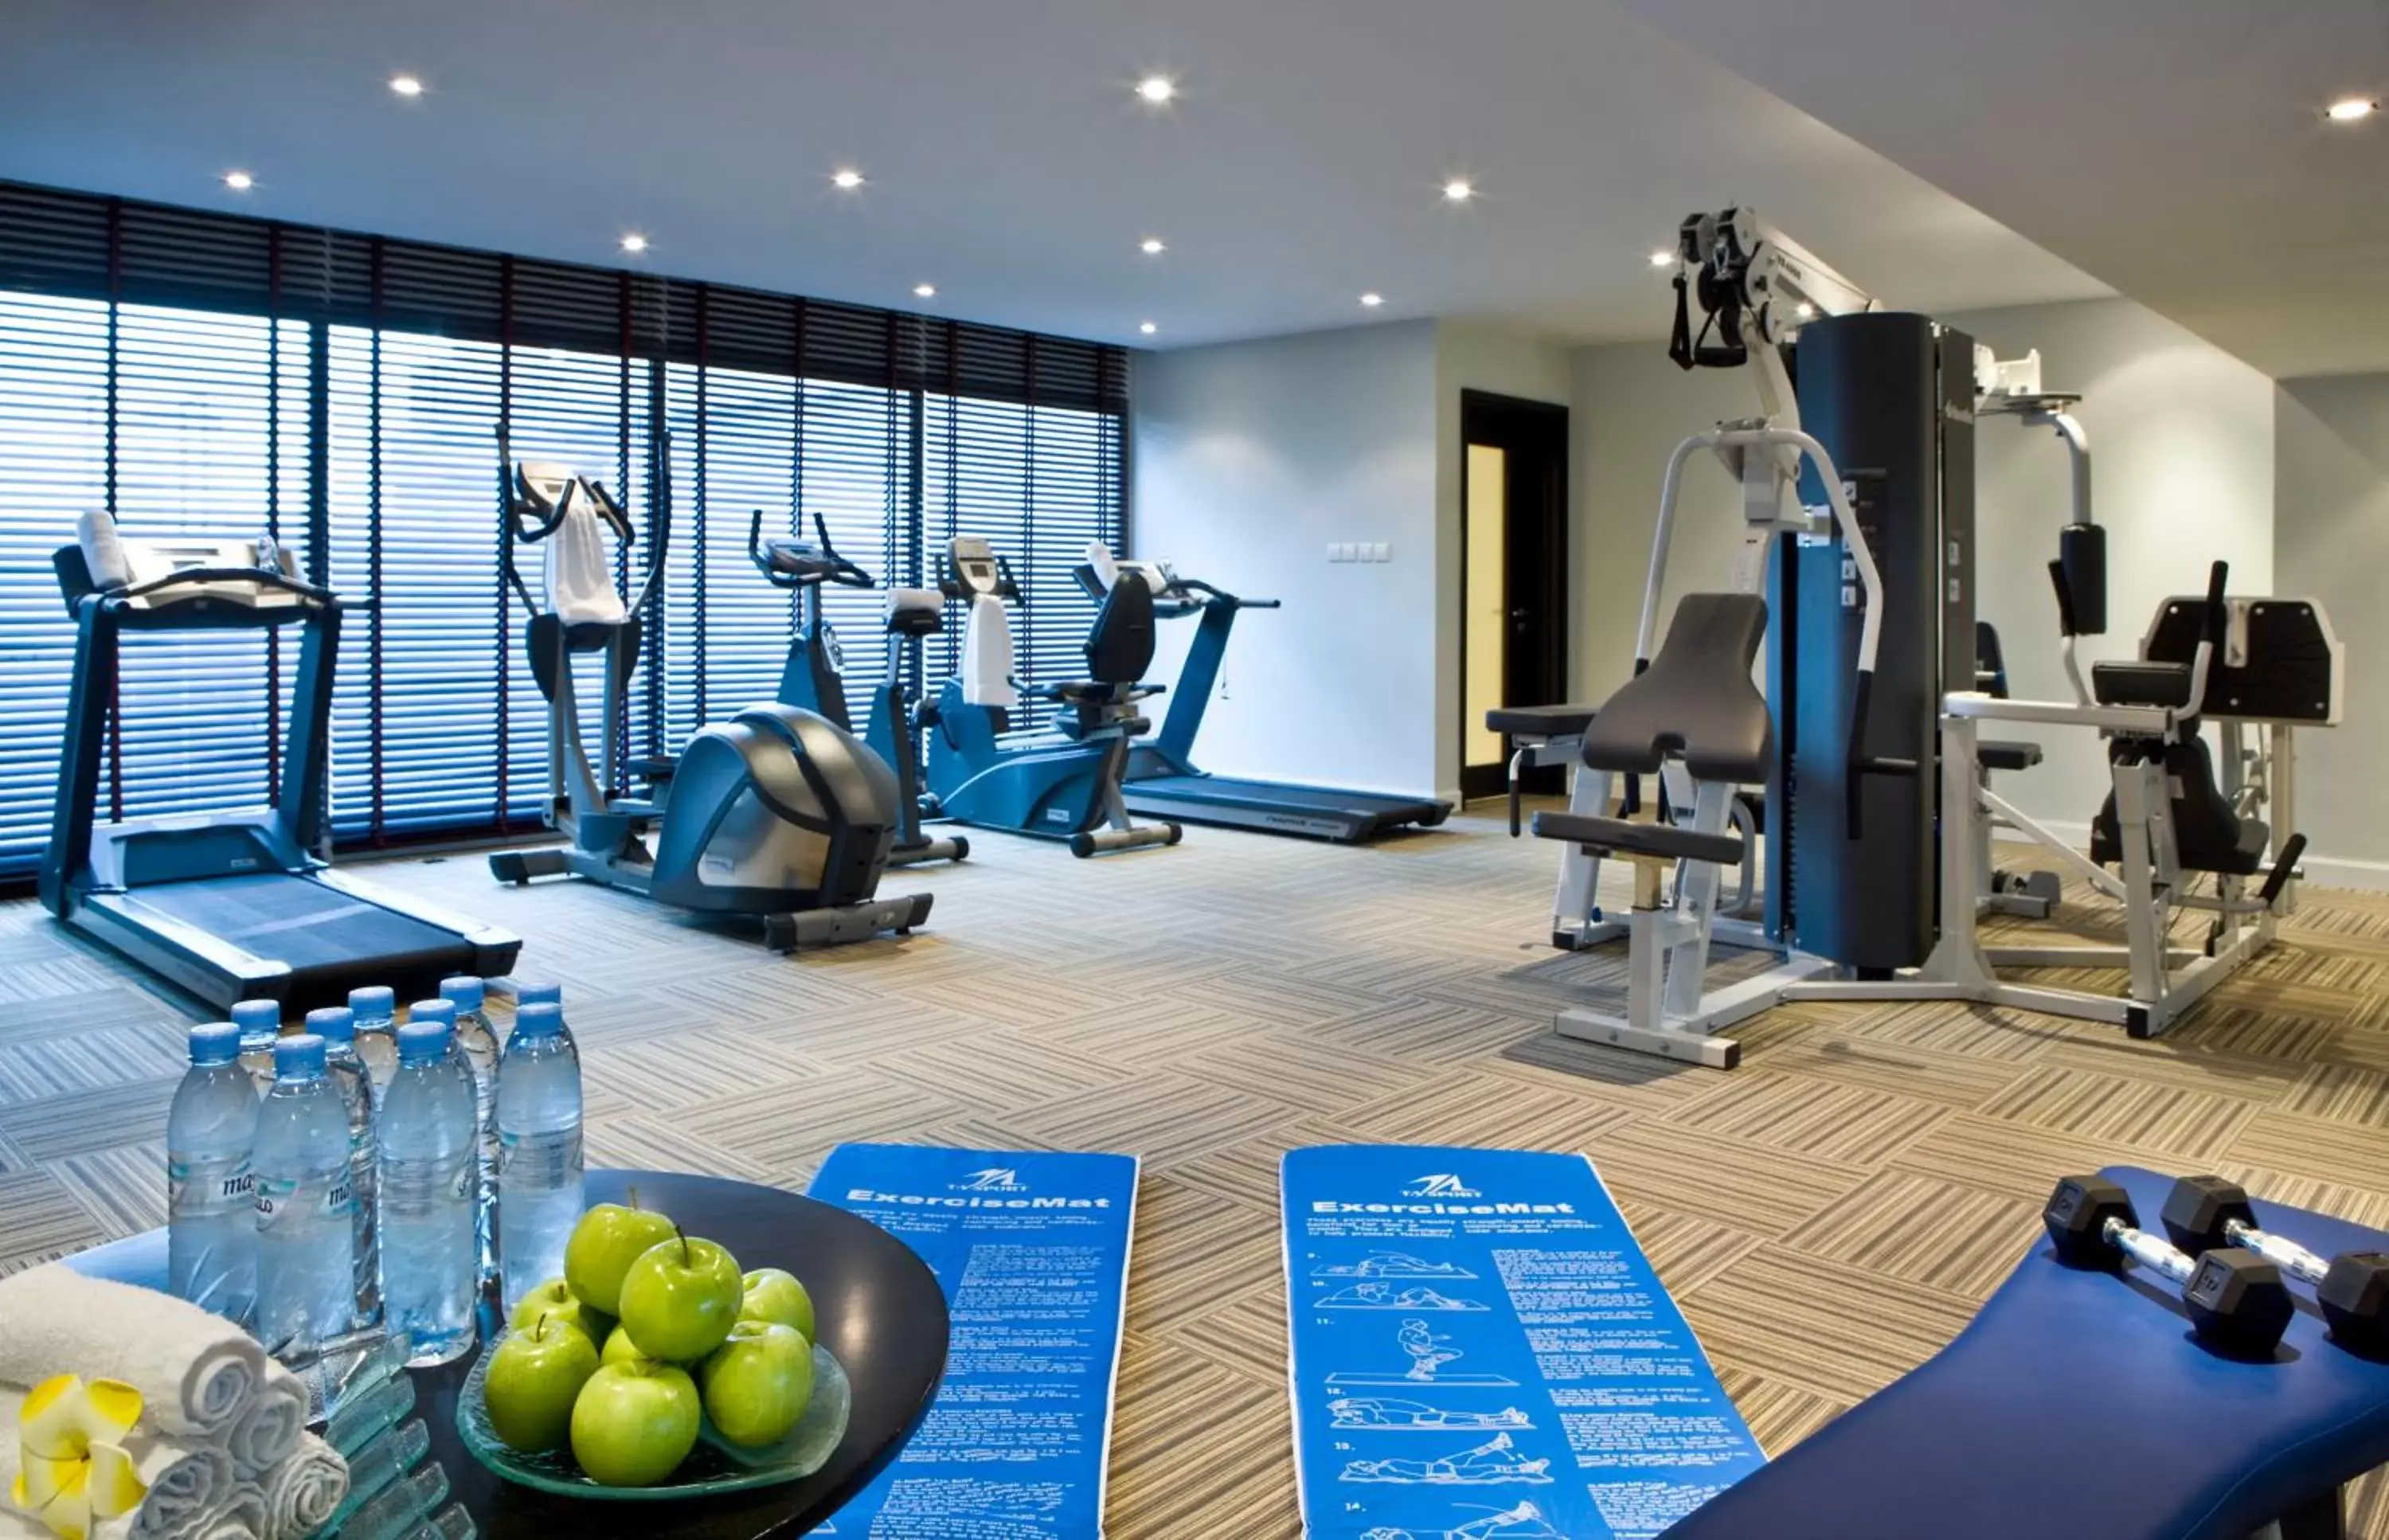 Fitness centre/facilities, Fitness Center/Facilities in Mercure Gold Hotel, Jumeirah, Dubai